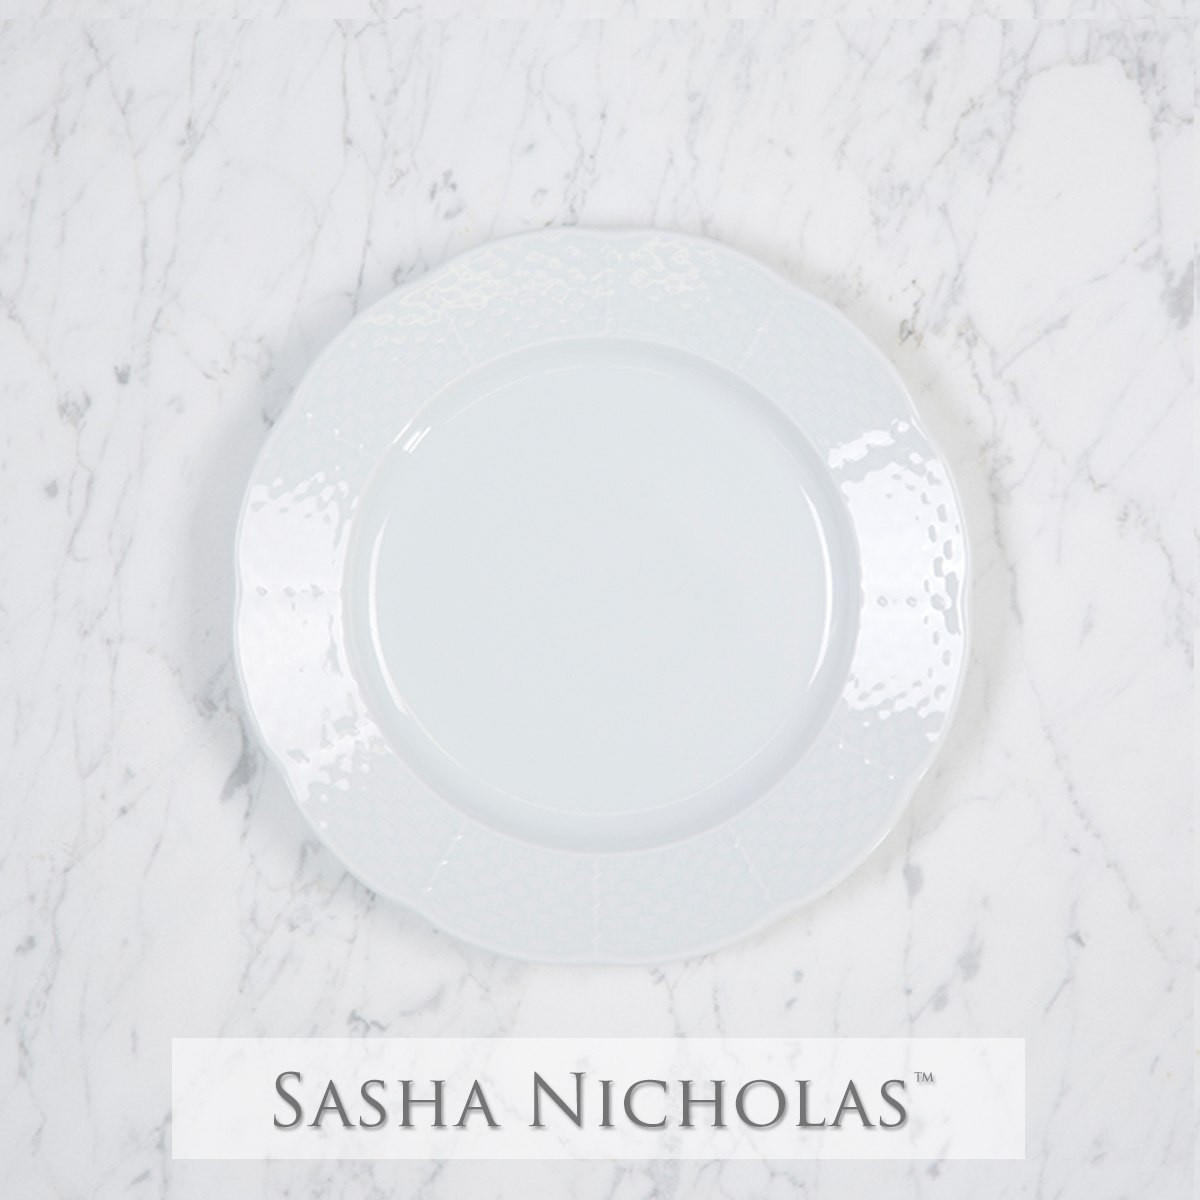 Trulaske-gurganus Weave Simply White Salad Plate, Trulaske-Gurganus Weave Simply White Salad Plate, Sasha Nicholas